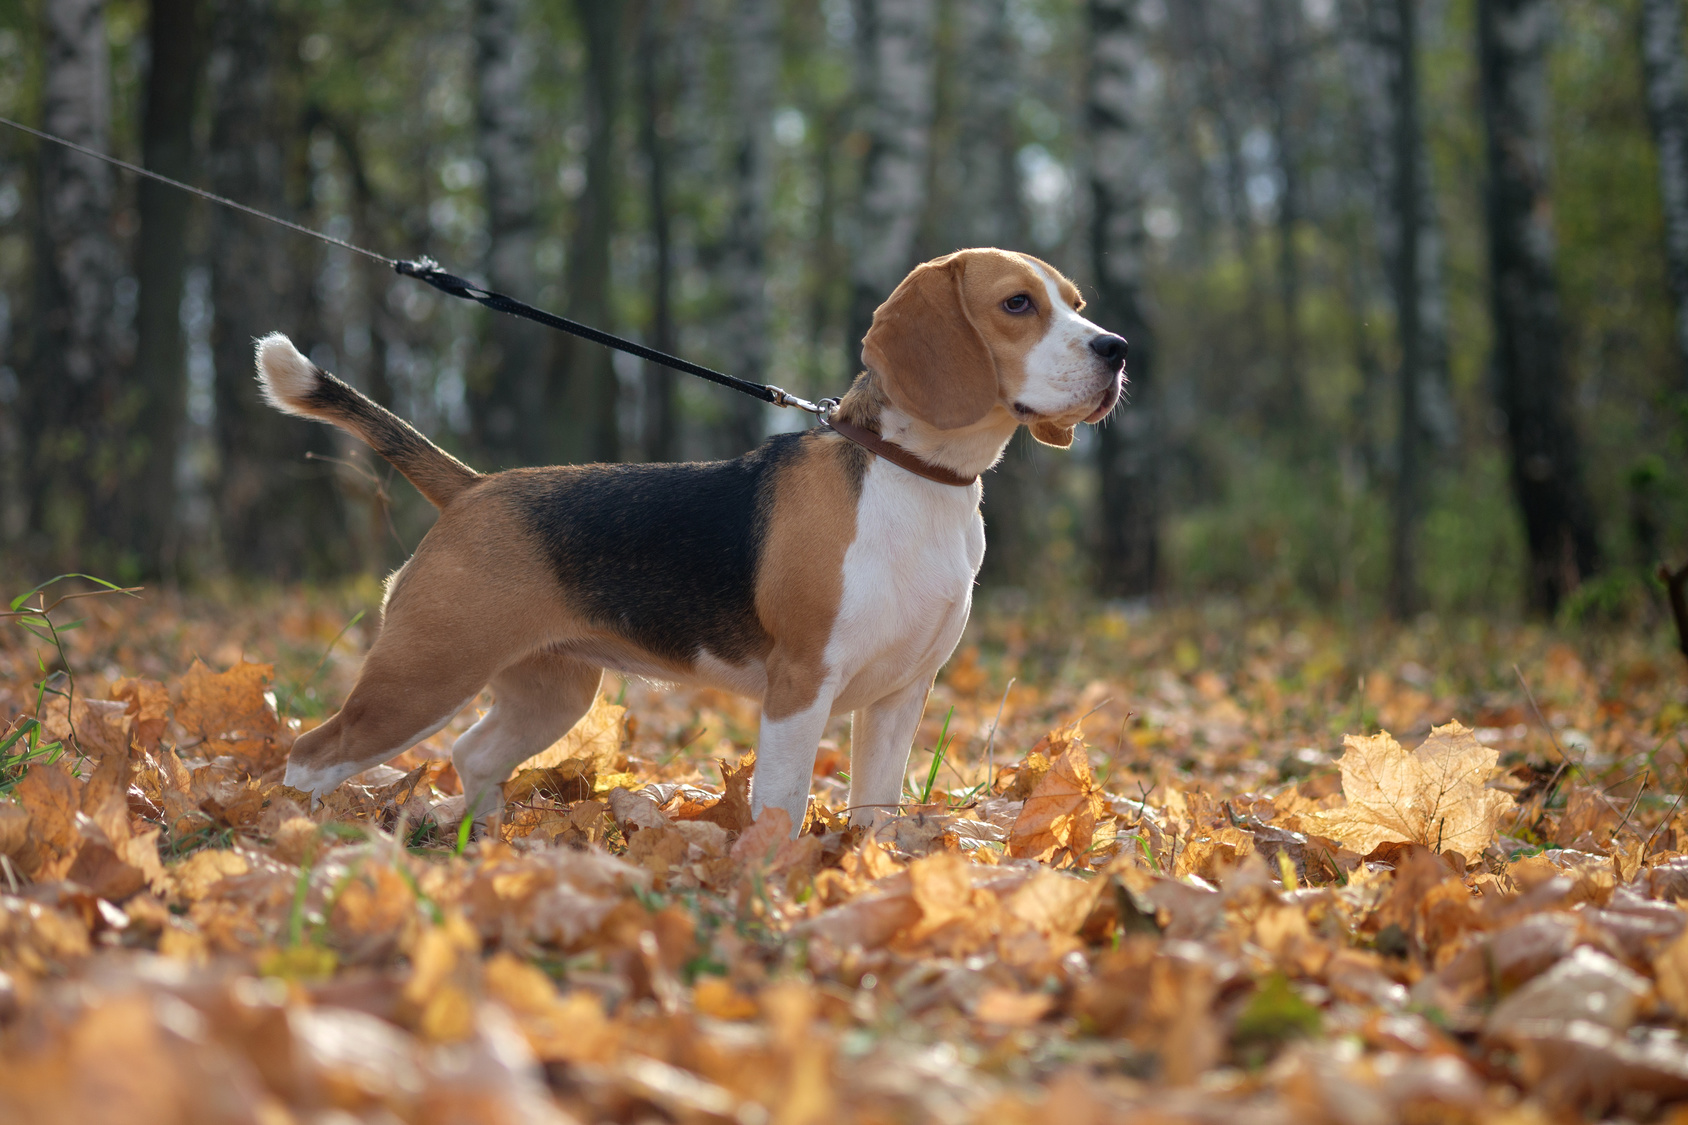 beagle sized dogs